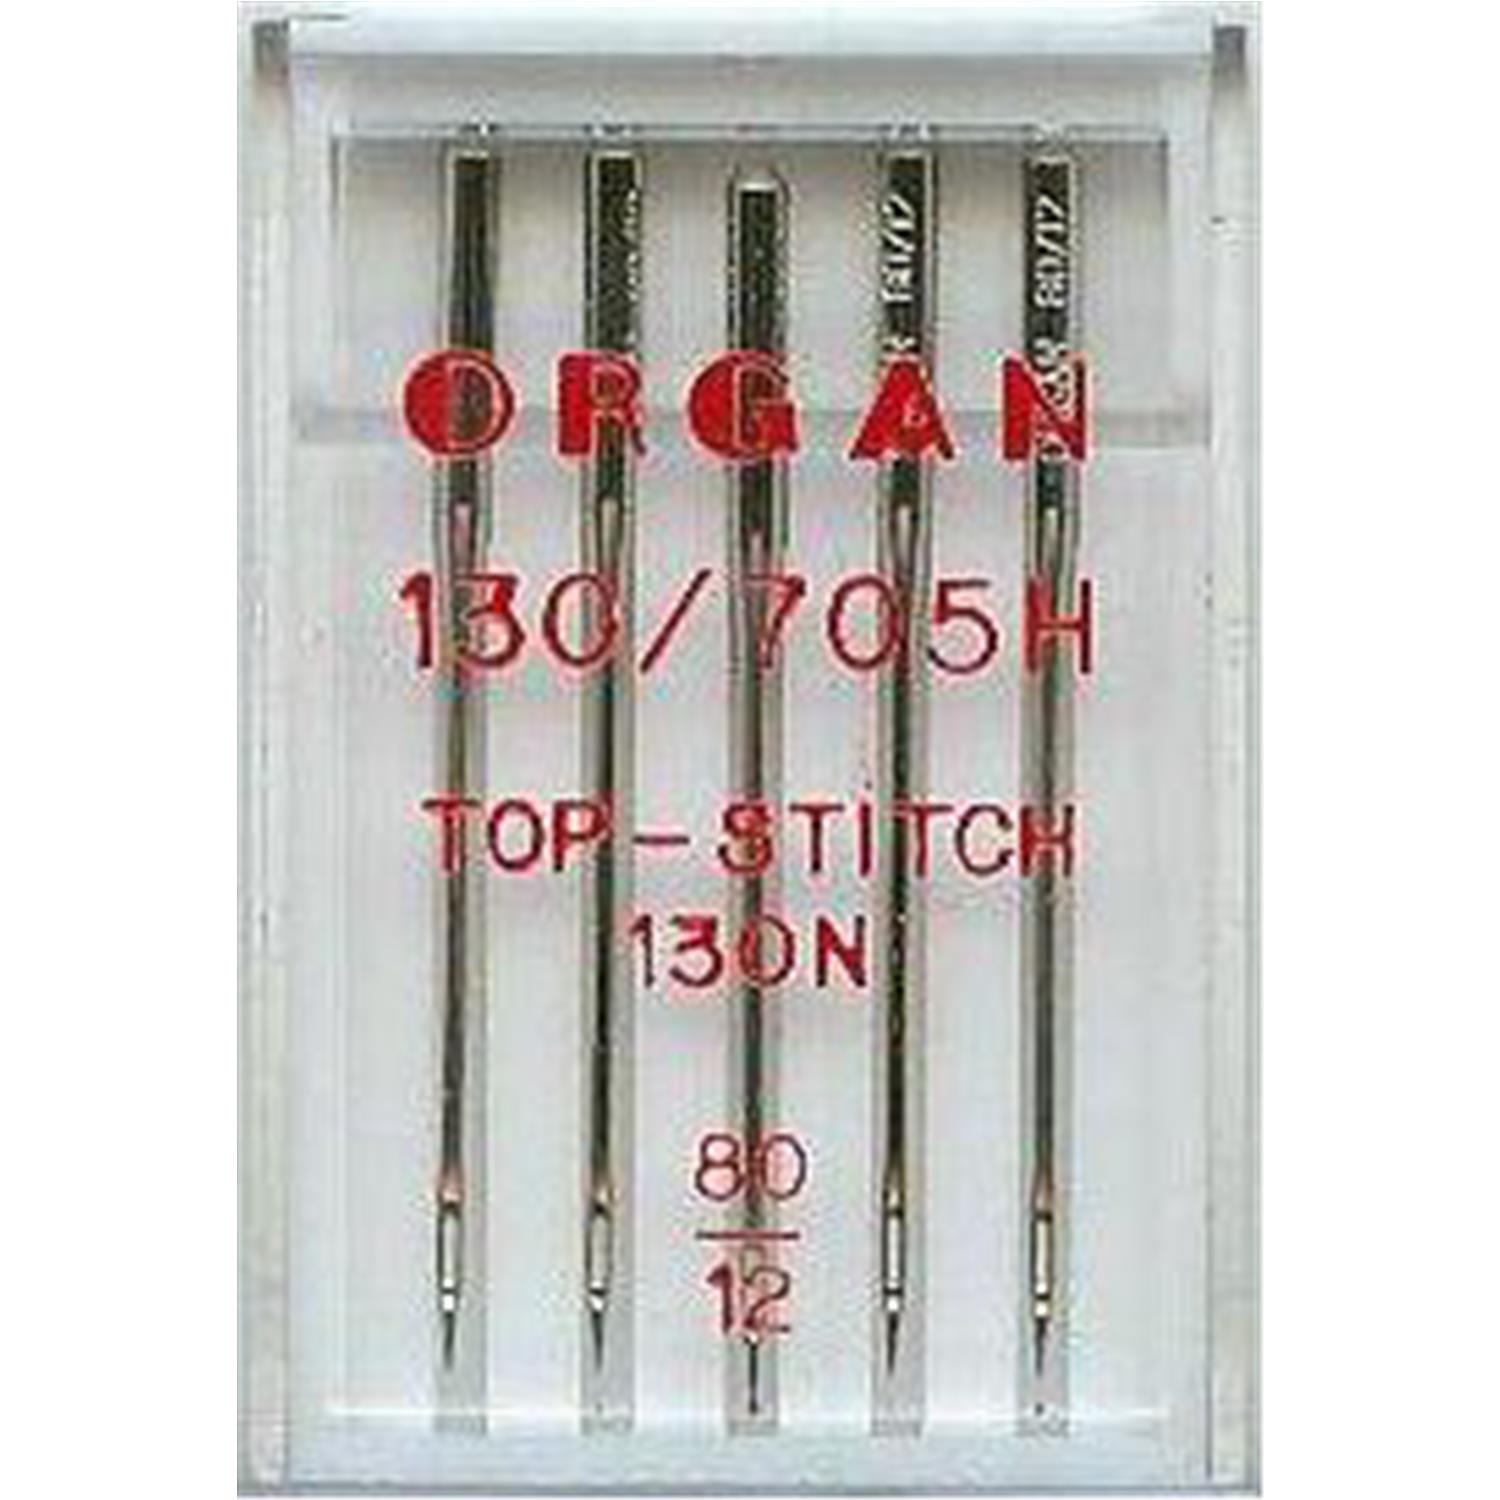 Nähmaschinennadeln Organ, Top-Stitch/130N, Stärke 80 #124